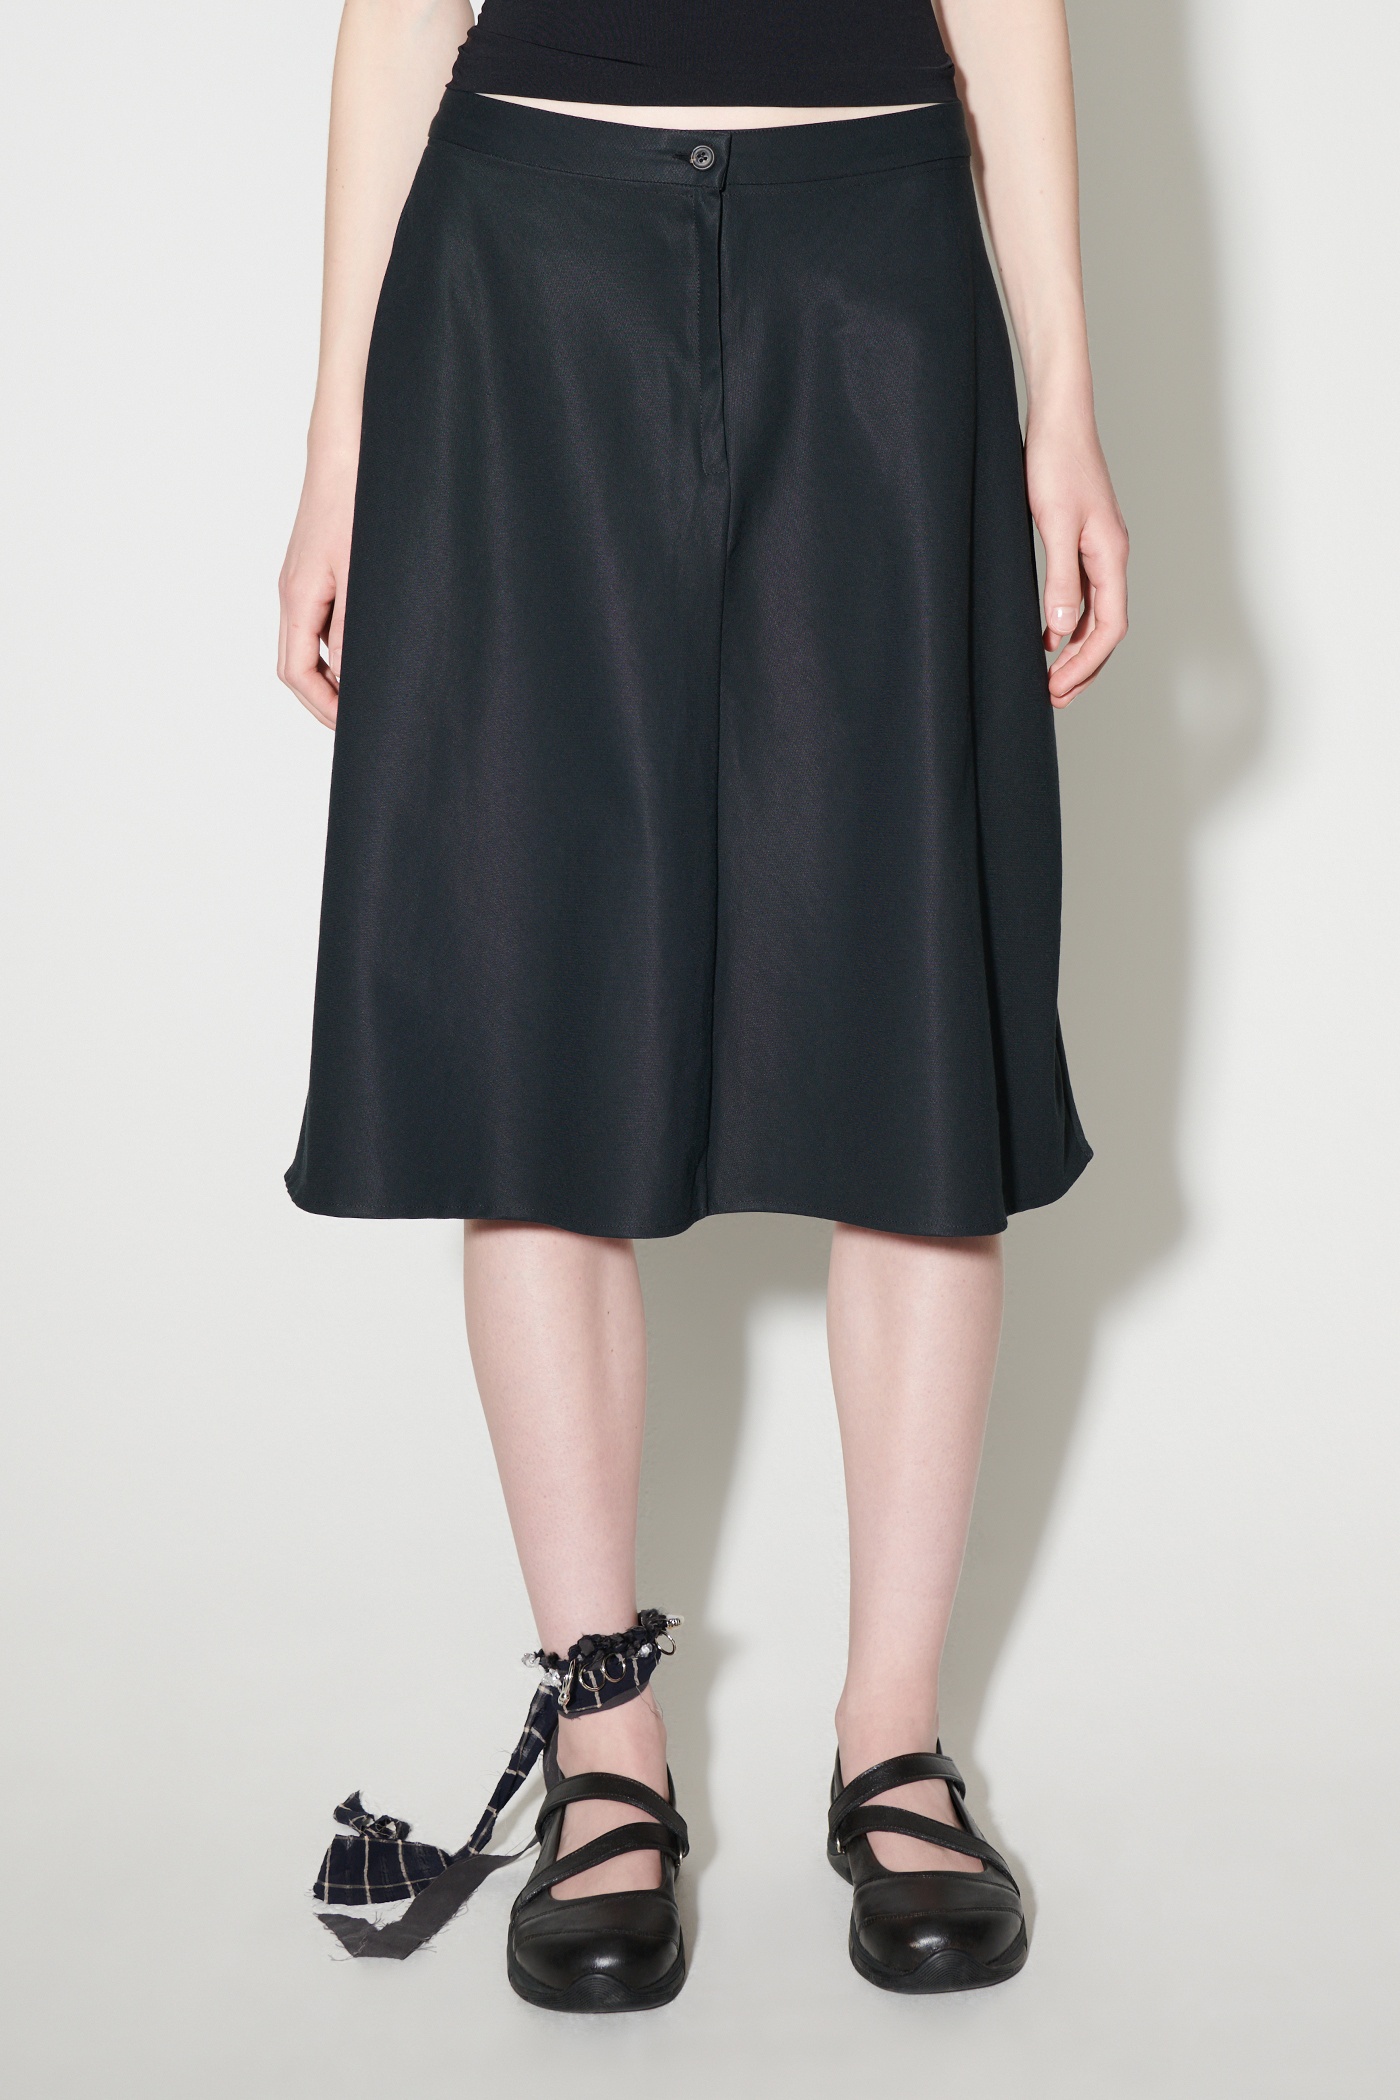 Curtain Skirt Deluxe Black Exquisite Wool - 7